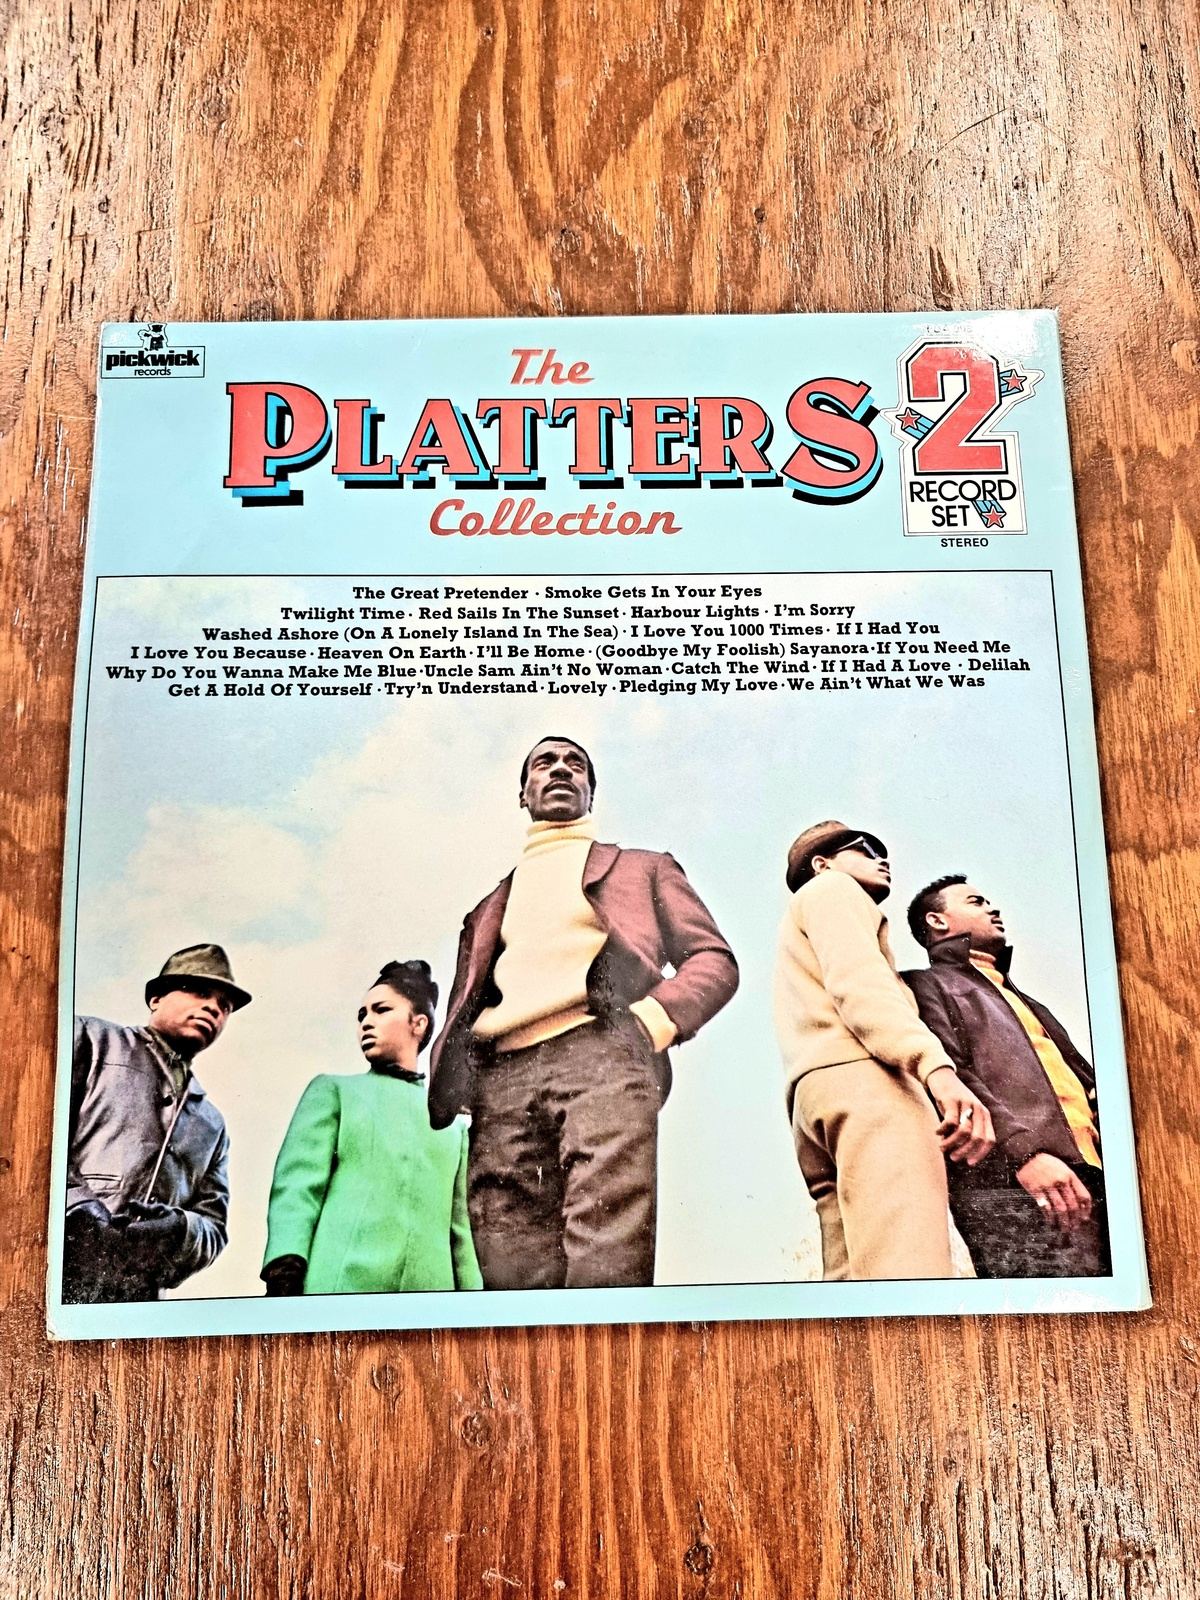 Platters record